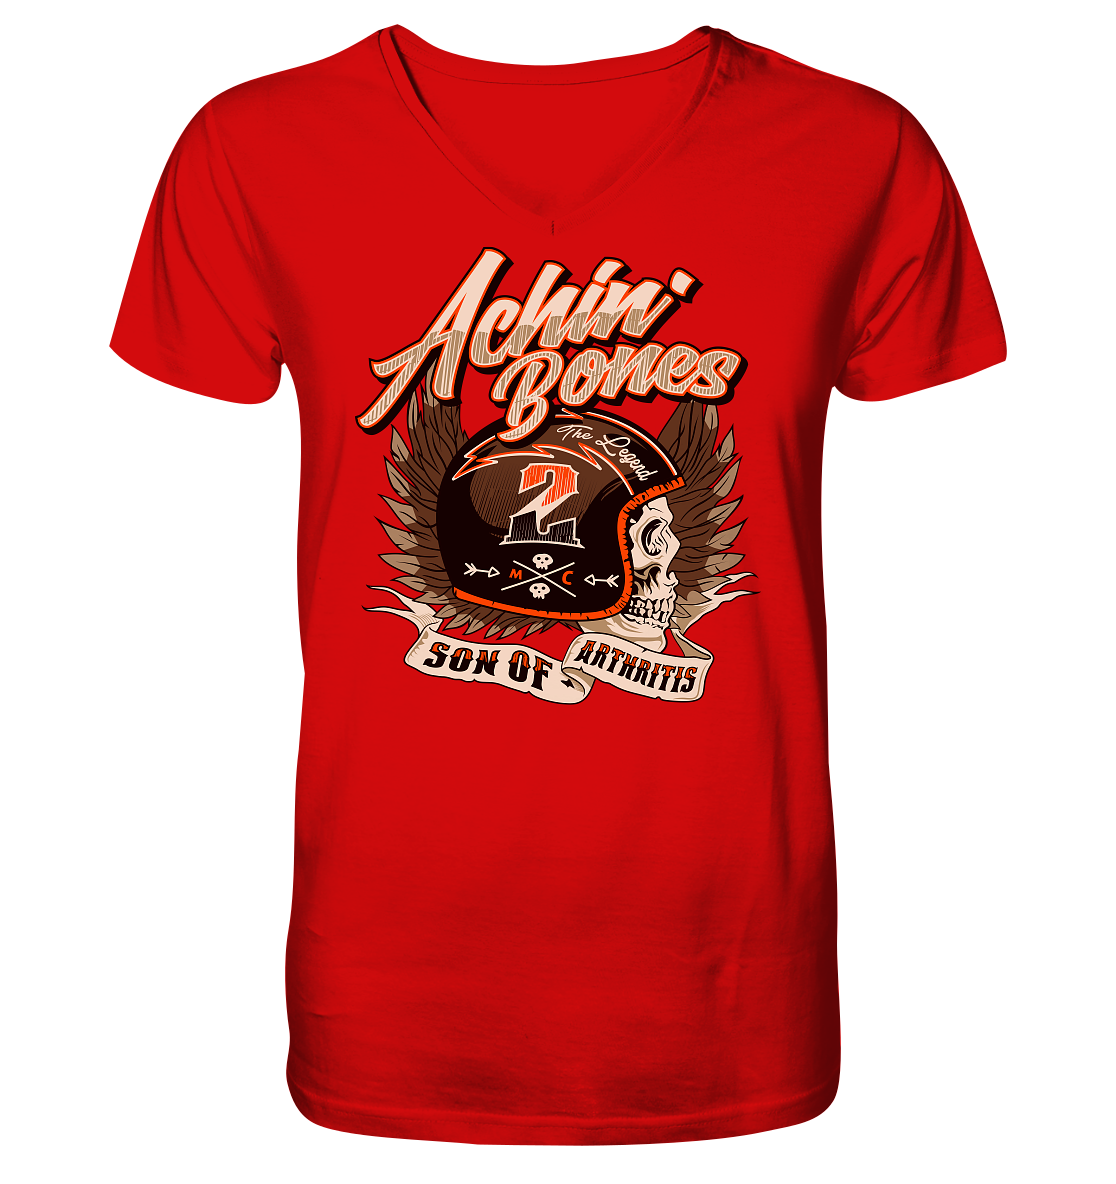 Sons of Arthritis - Achin Bones - V-Neck Shirt. Motiv Vorderseite.